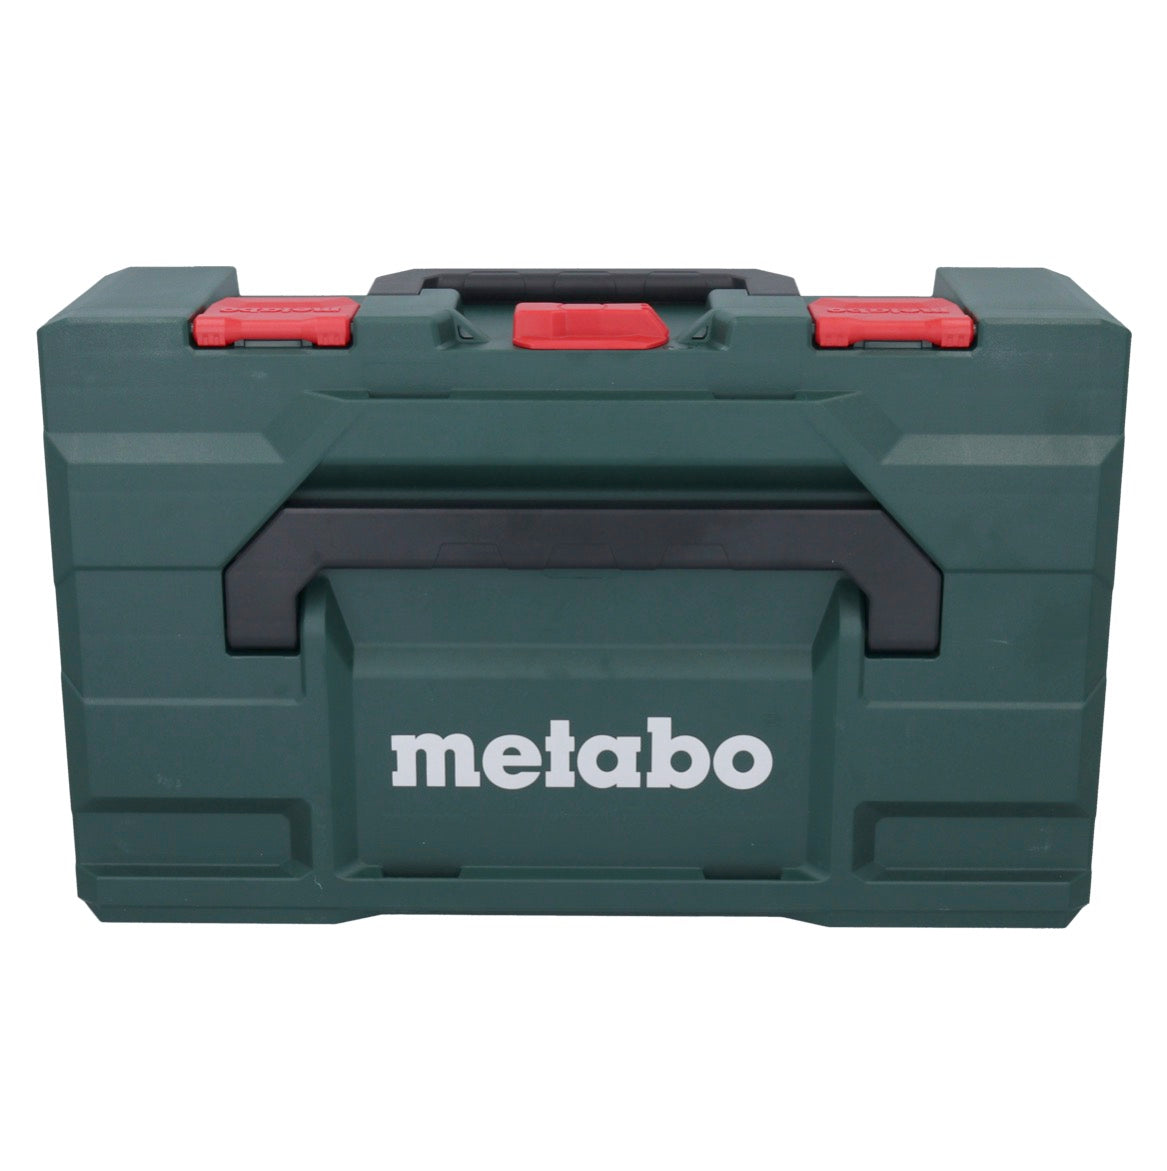 Metabo WPB 18 LT BL 11-125 Quick Akku Winkelschleifer 18 V 125 mm Brushless + 1x Akku 4,0 Ah + Ladegerät + metaBOX - Toolbrothers